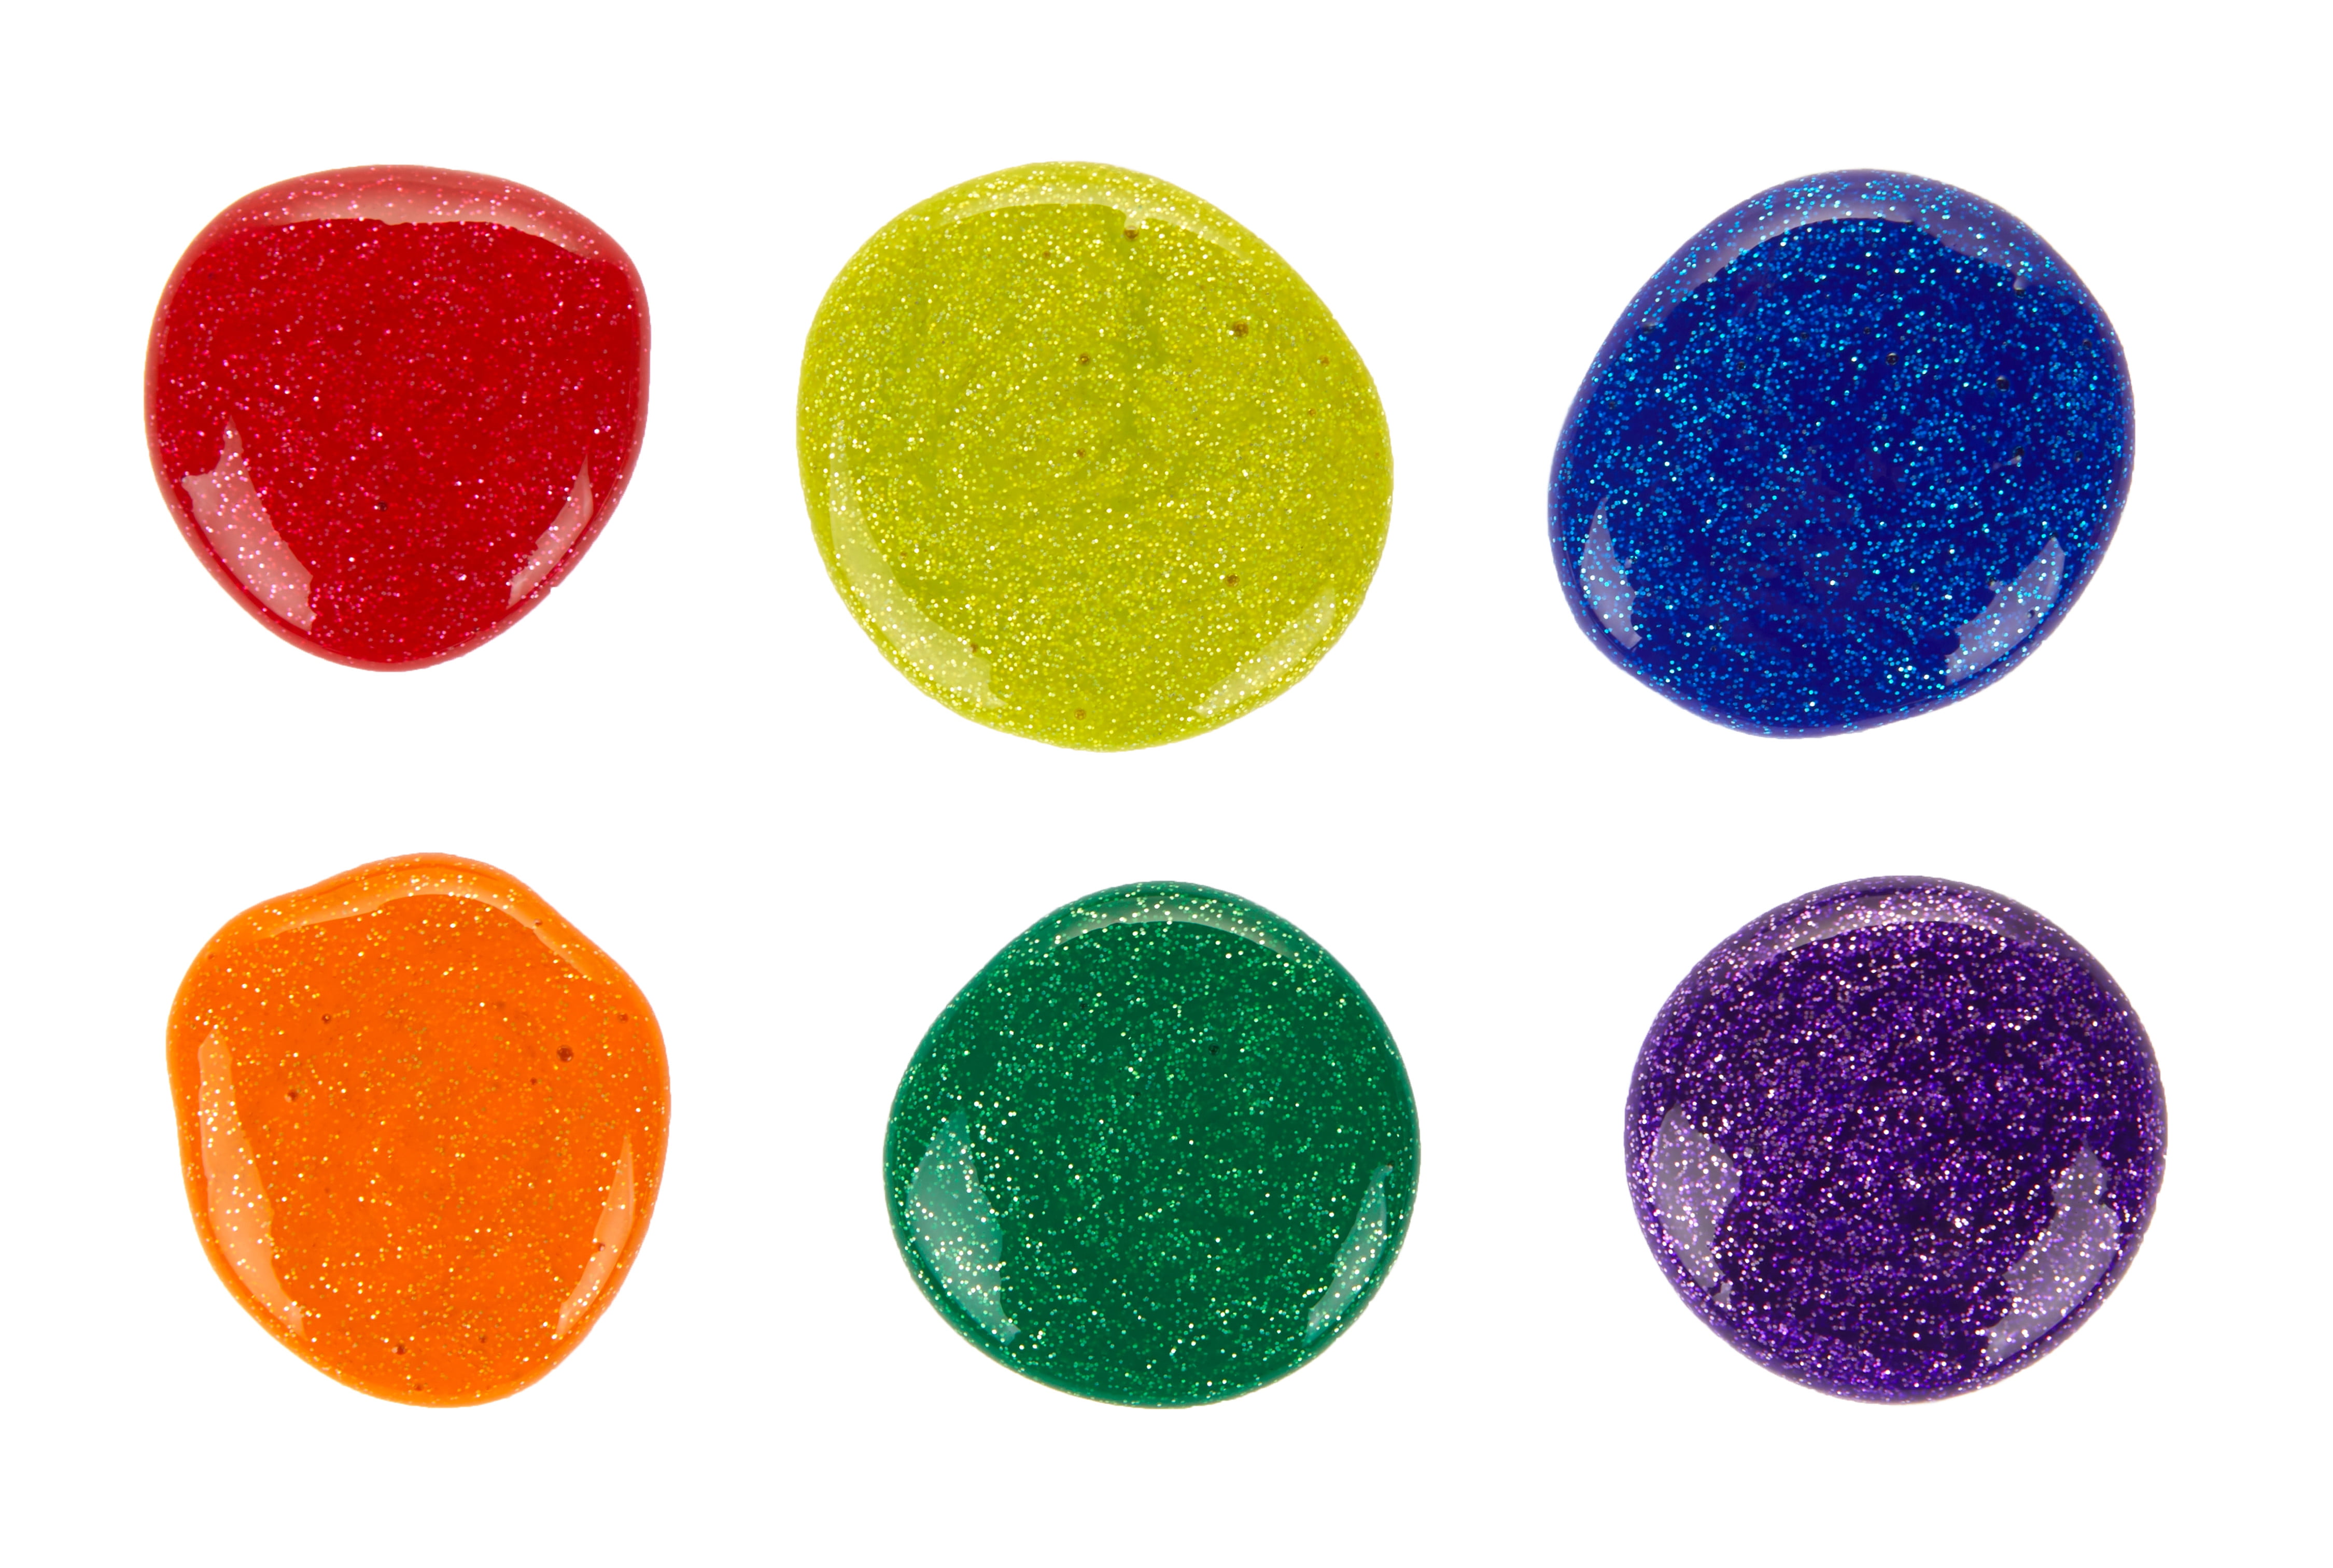 Crayola Washable Kids Paint Set – 6 Glitter Colors - Quality Art, Inc.  School and Fine Art Supplies